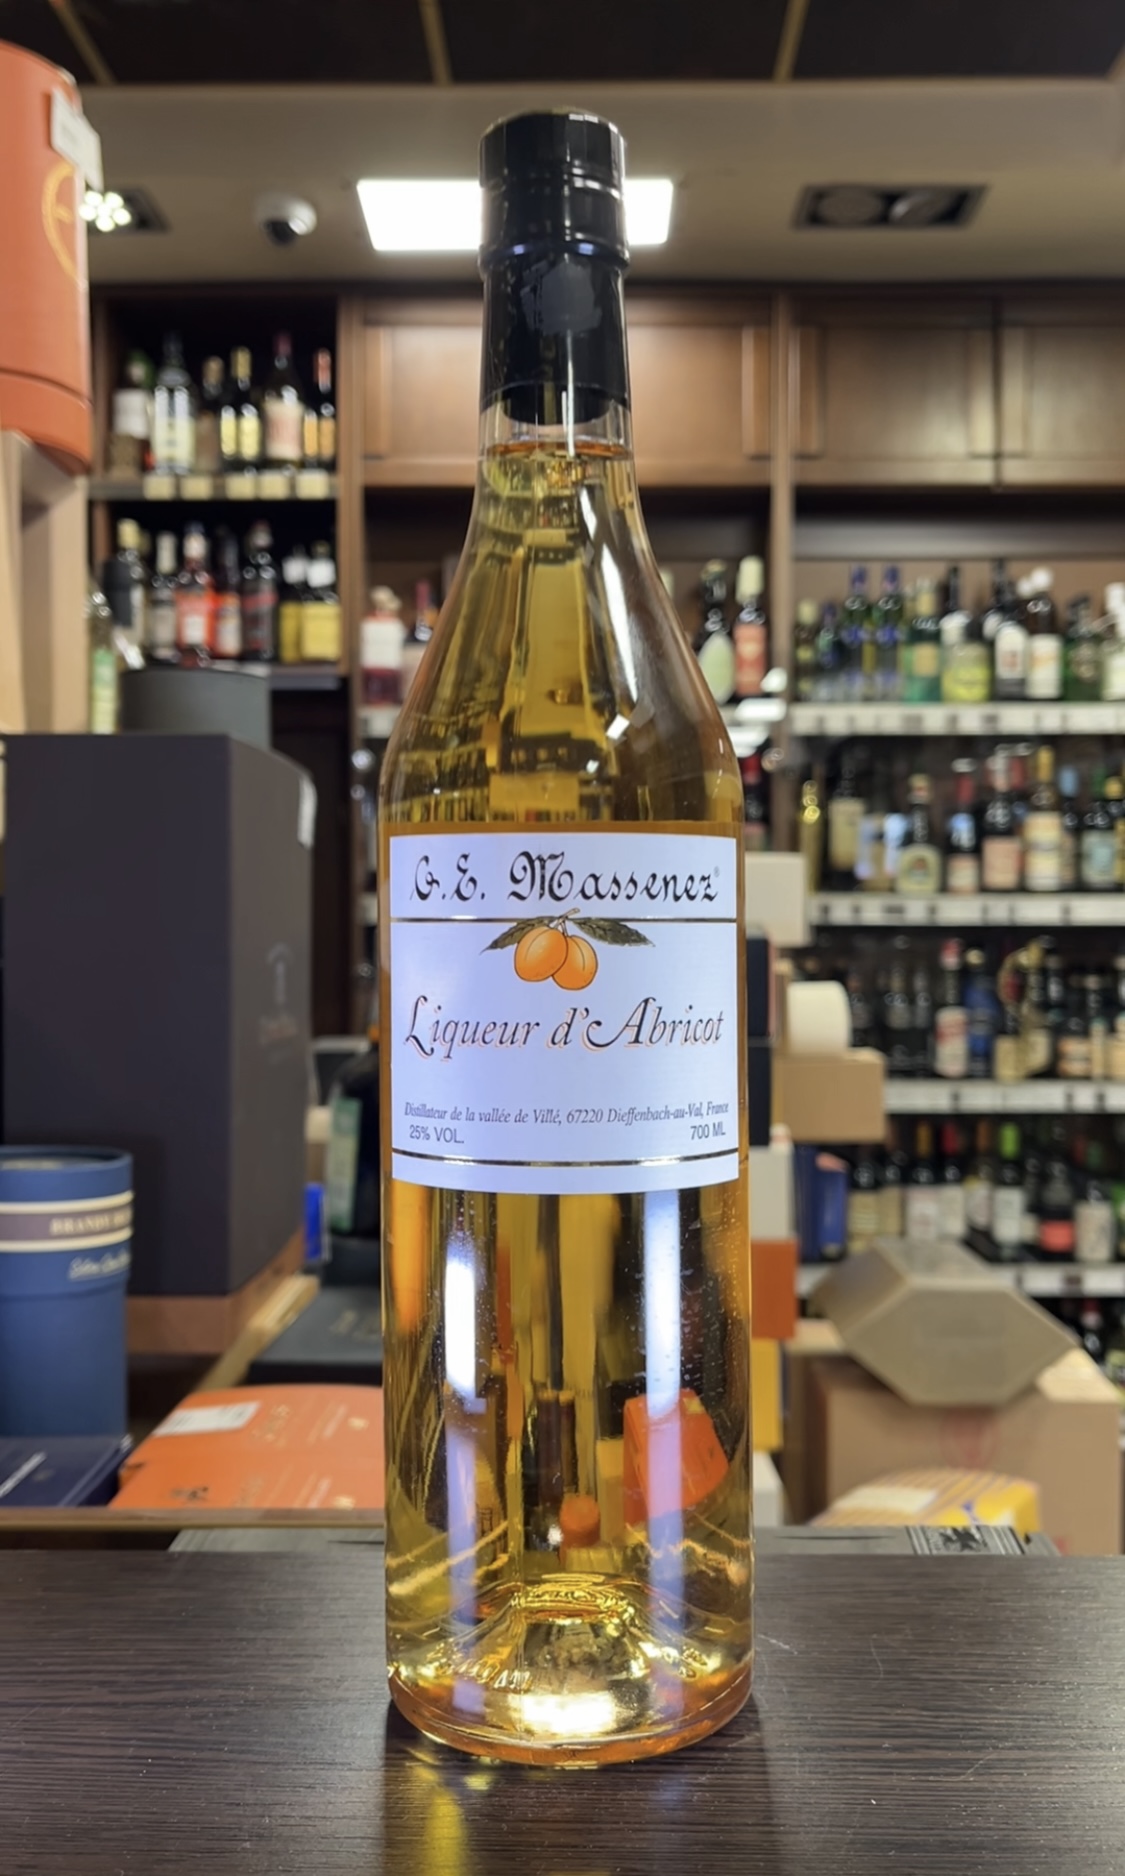 Giffard Premium Abricot du Roussillon Ликёр Ж.Е. Массене Абрикос 